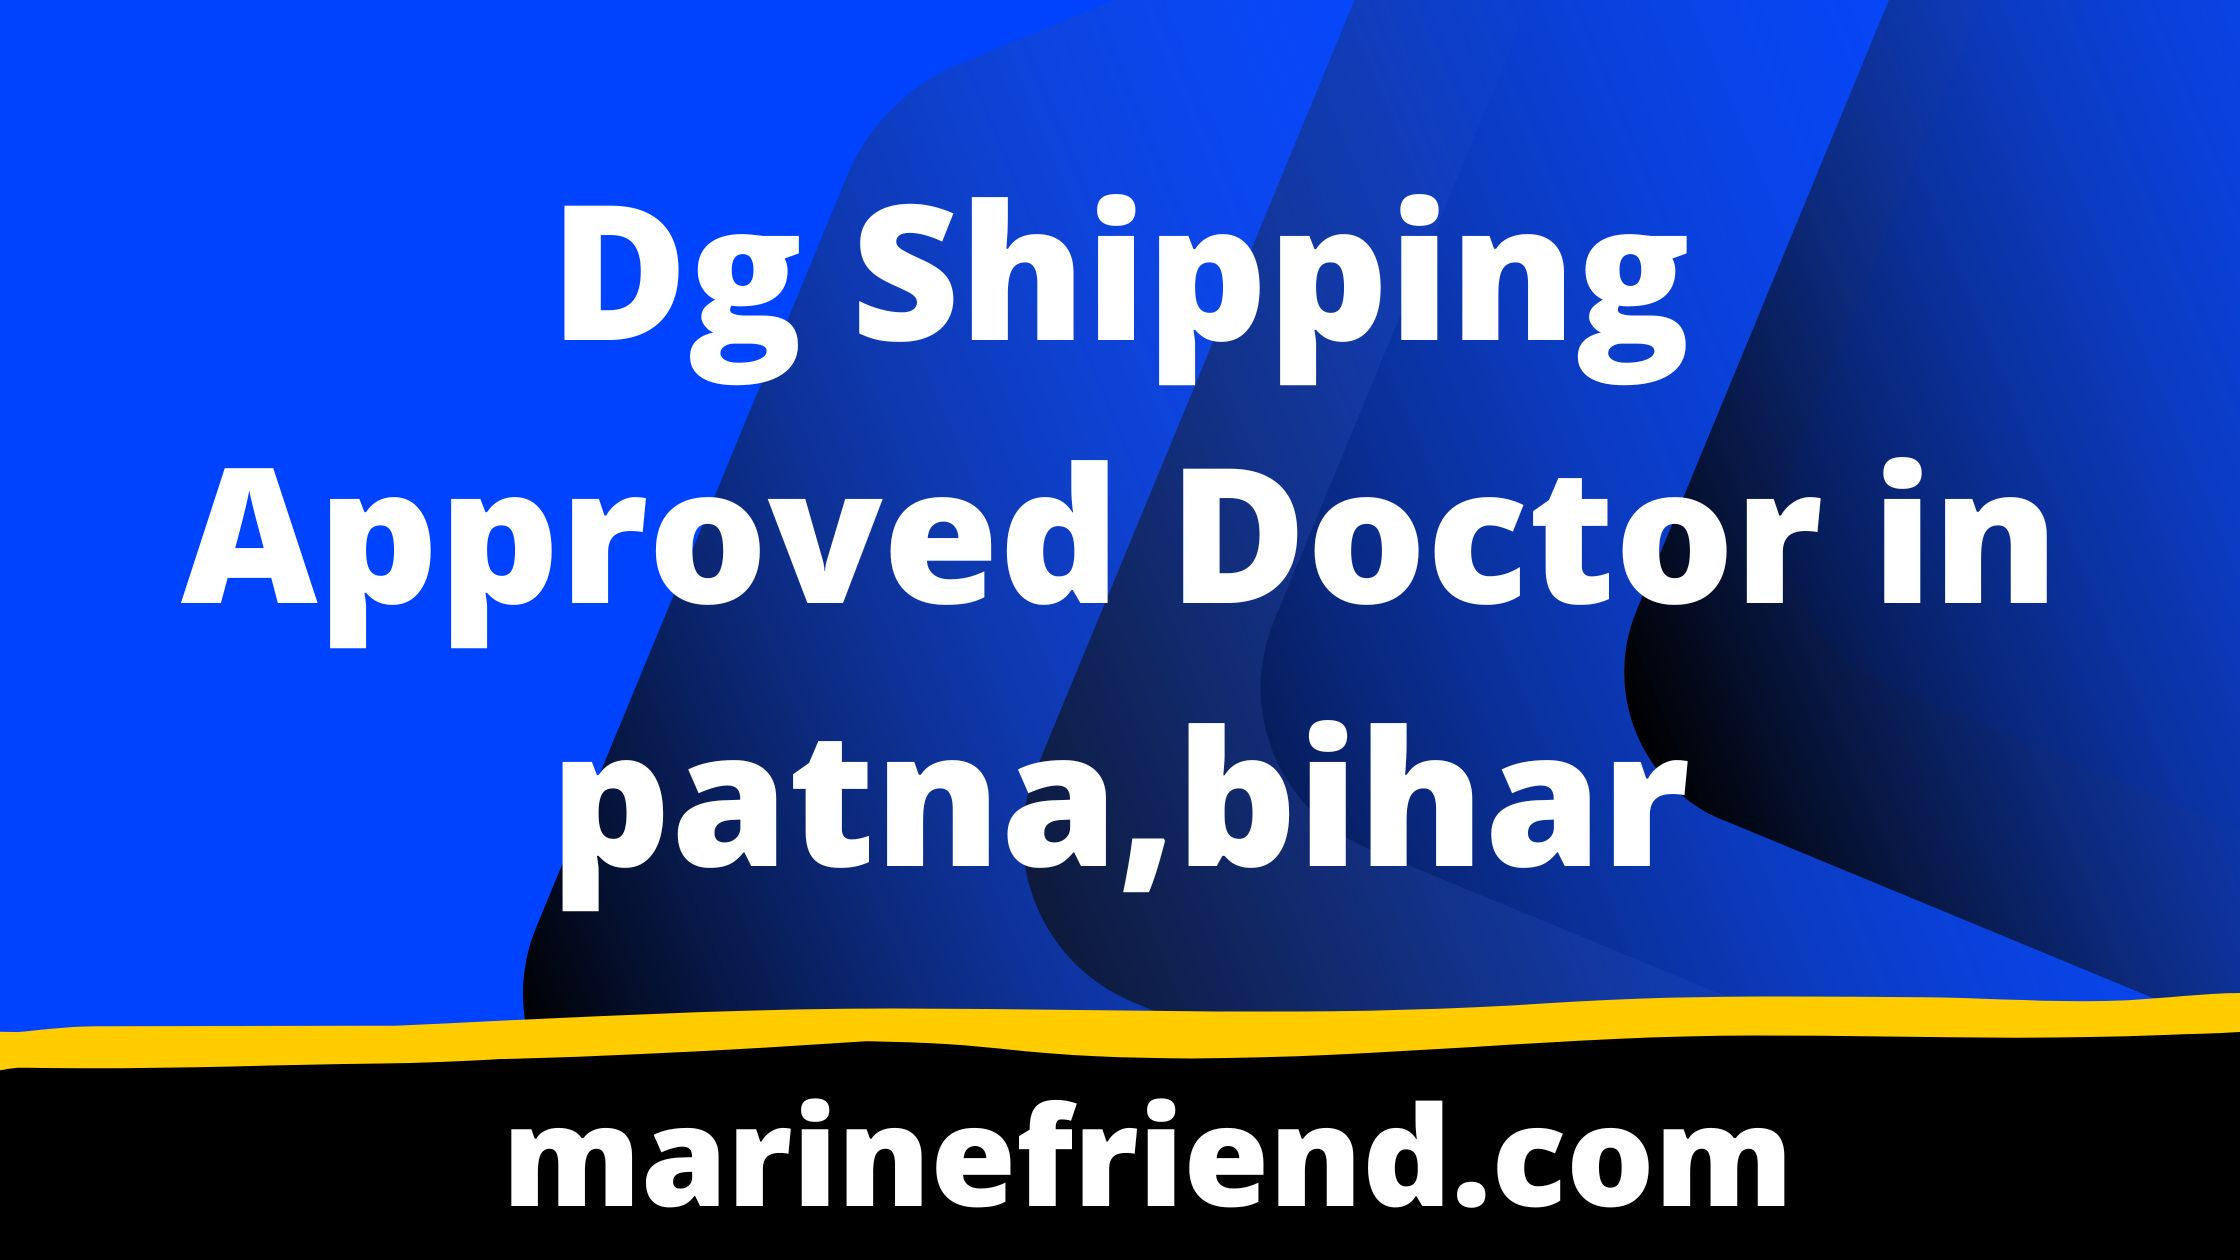 Dg approved doctor in Patna